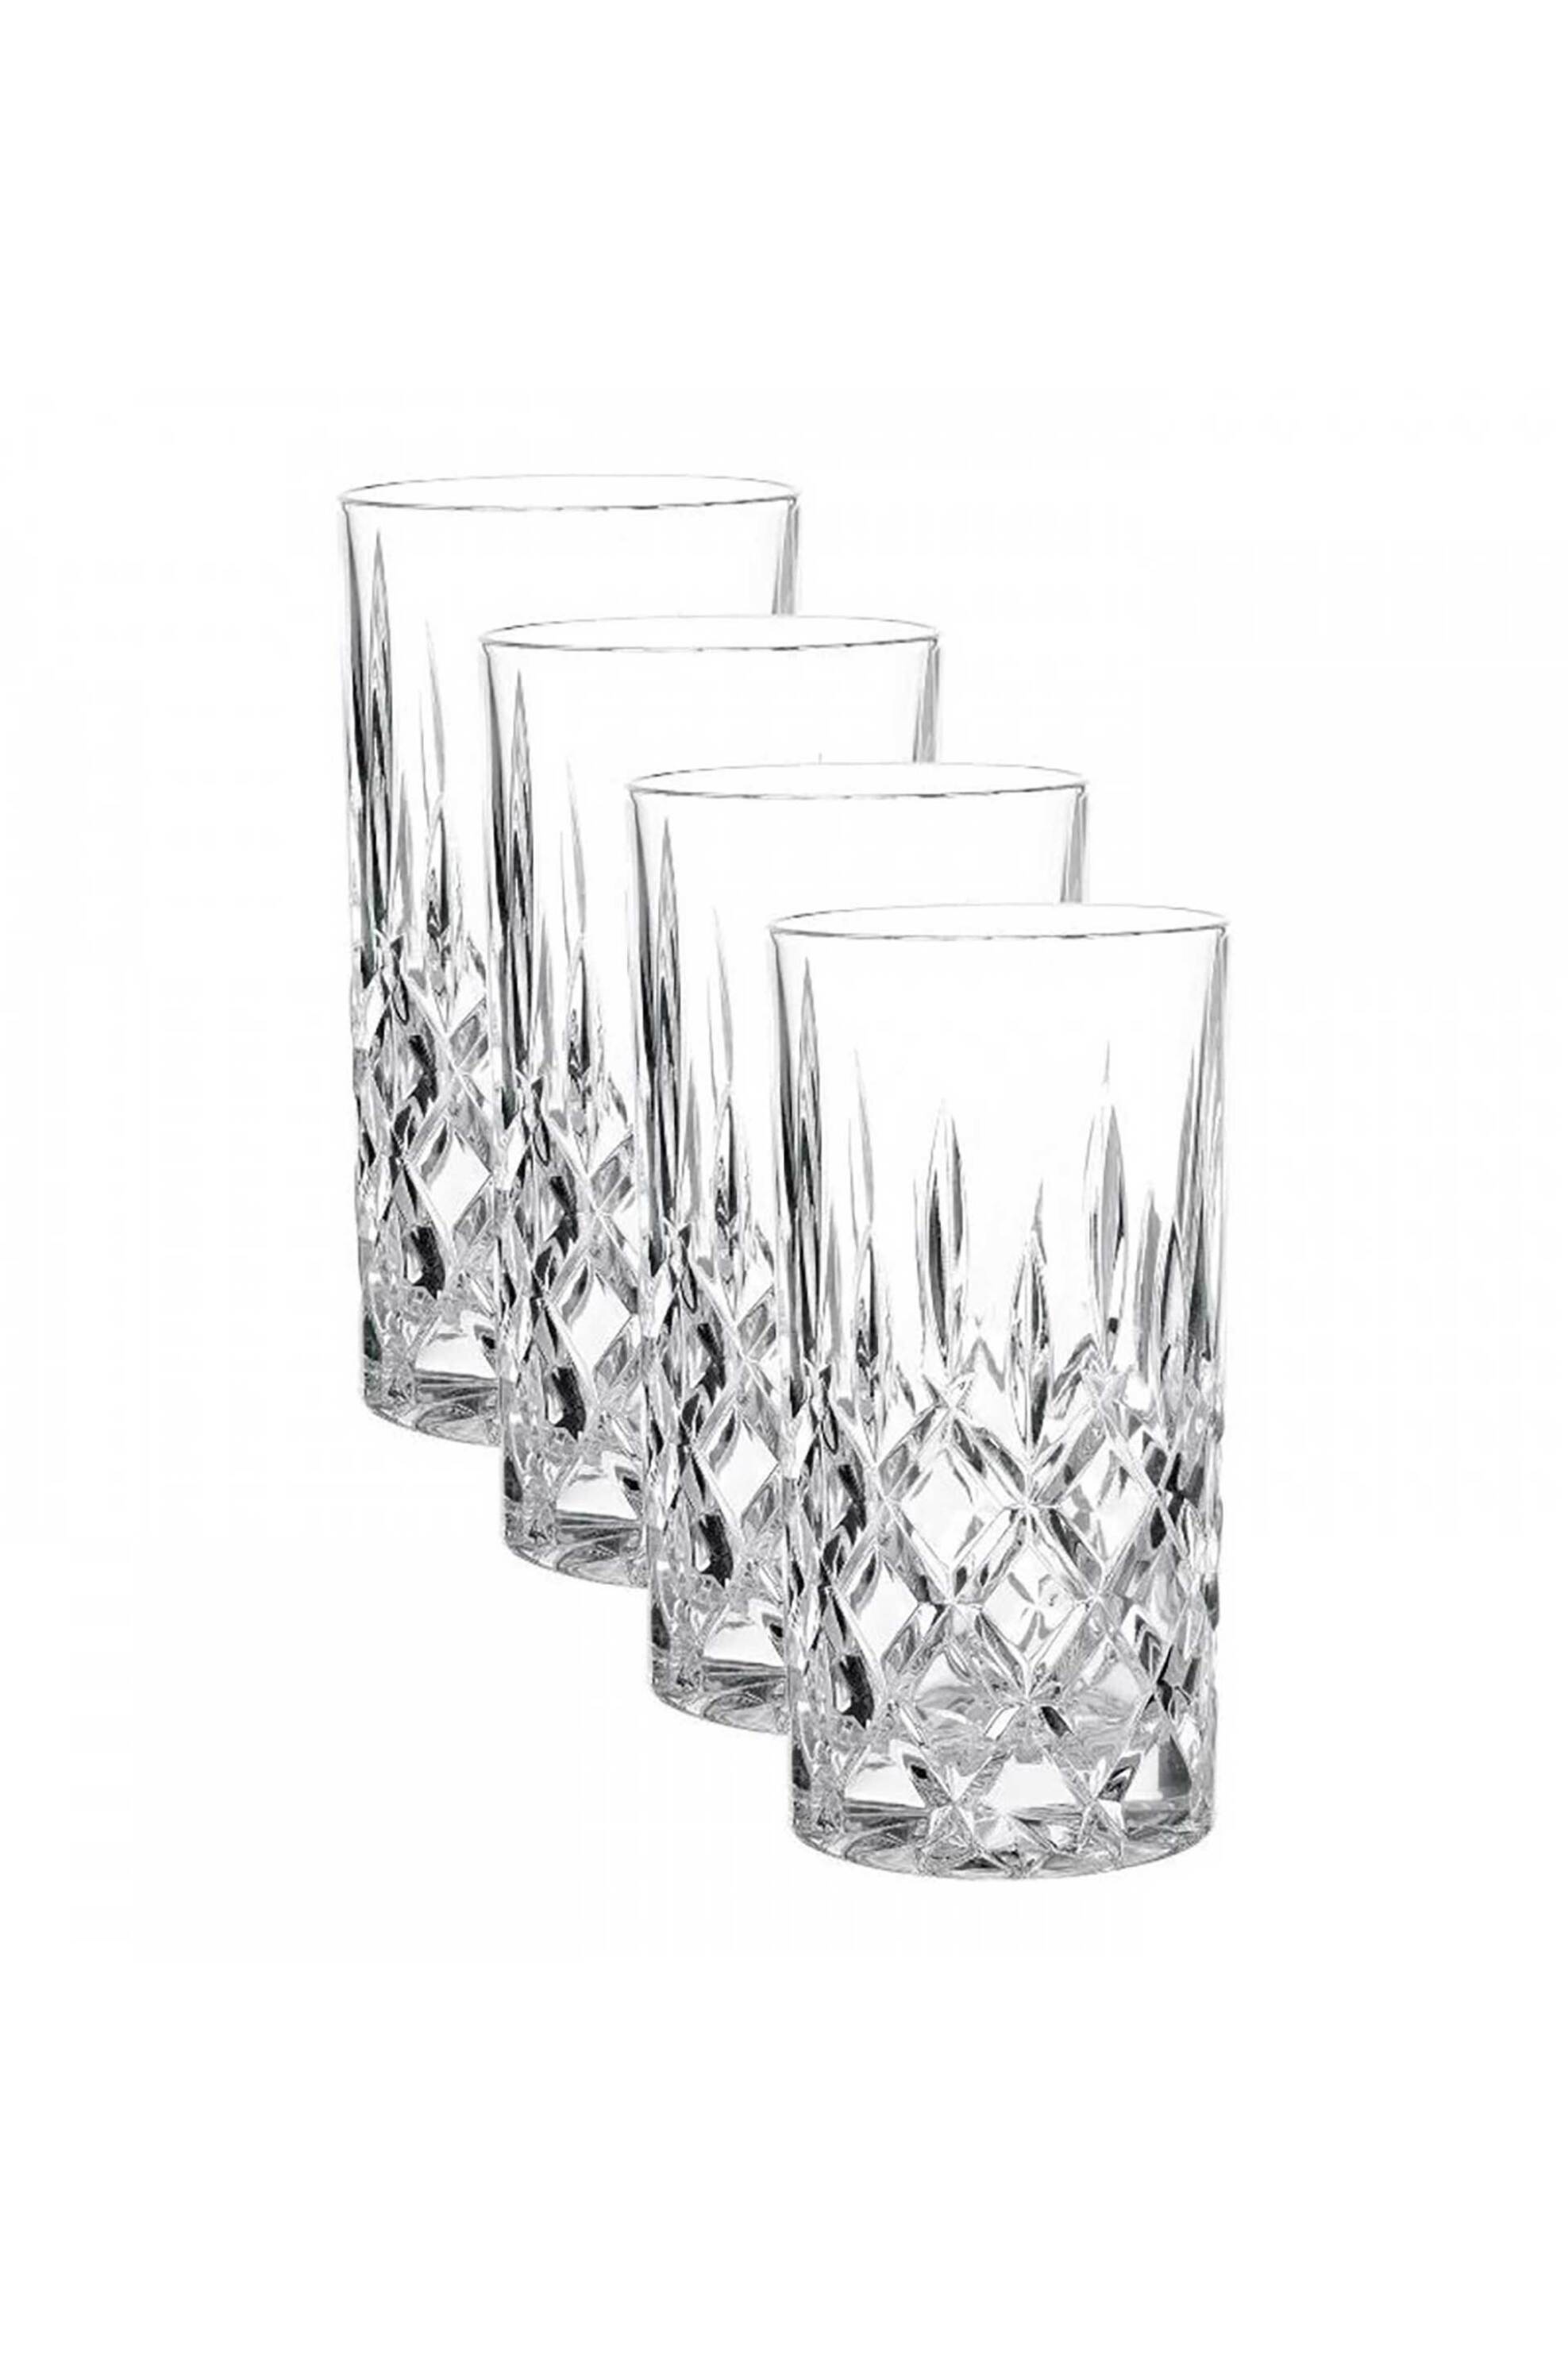 Home > ΚΟΥΖΙΝΑ > Υαλικά > Ποτήρια Nachtmann σετ κρυστάλλινα ποτήρια αναψυκτικού με ανάγλυφο σχέδιο "Noblesse" 375 ml - 0089208-0